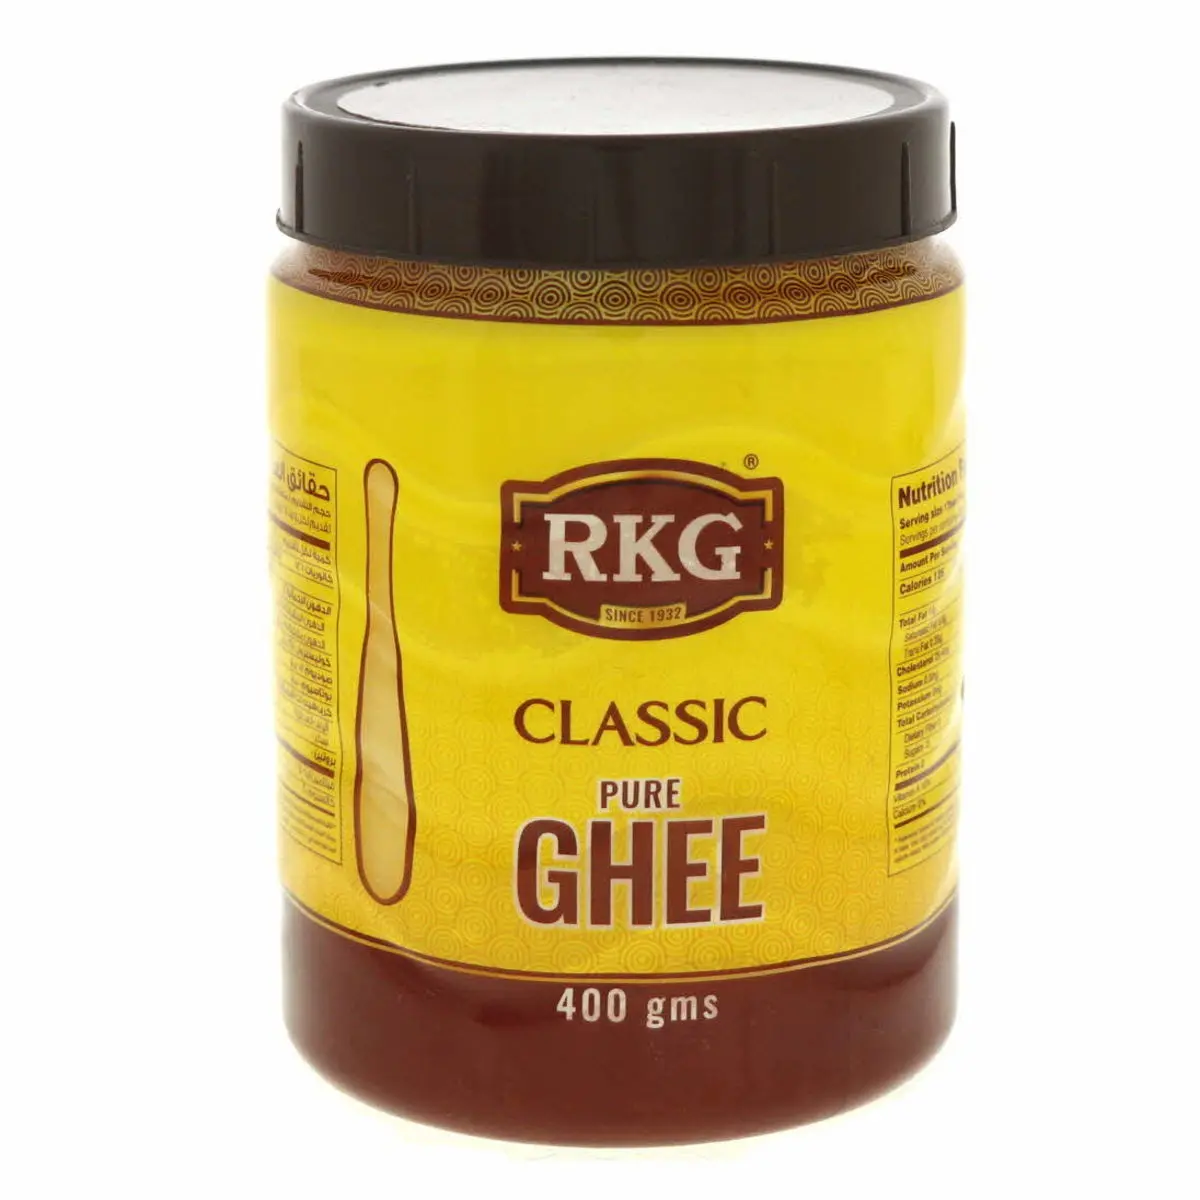 RKG Classic Pure Ghee